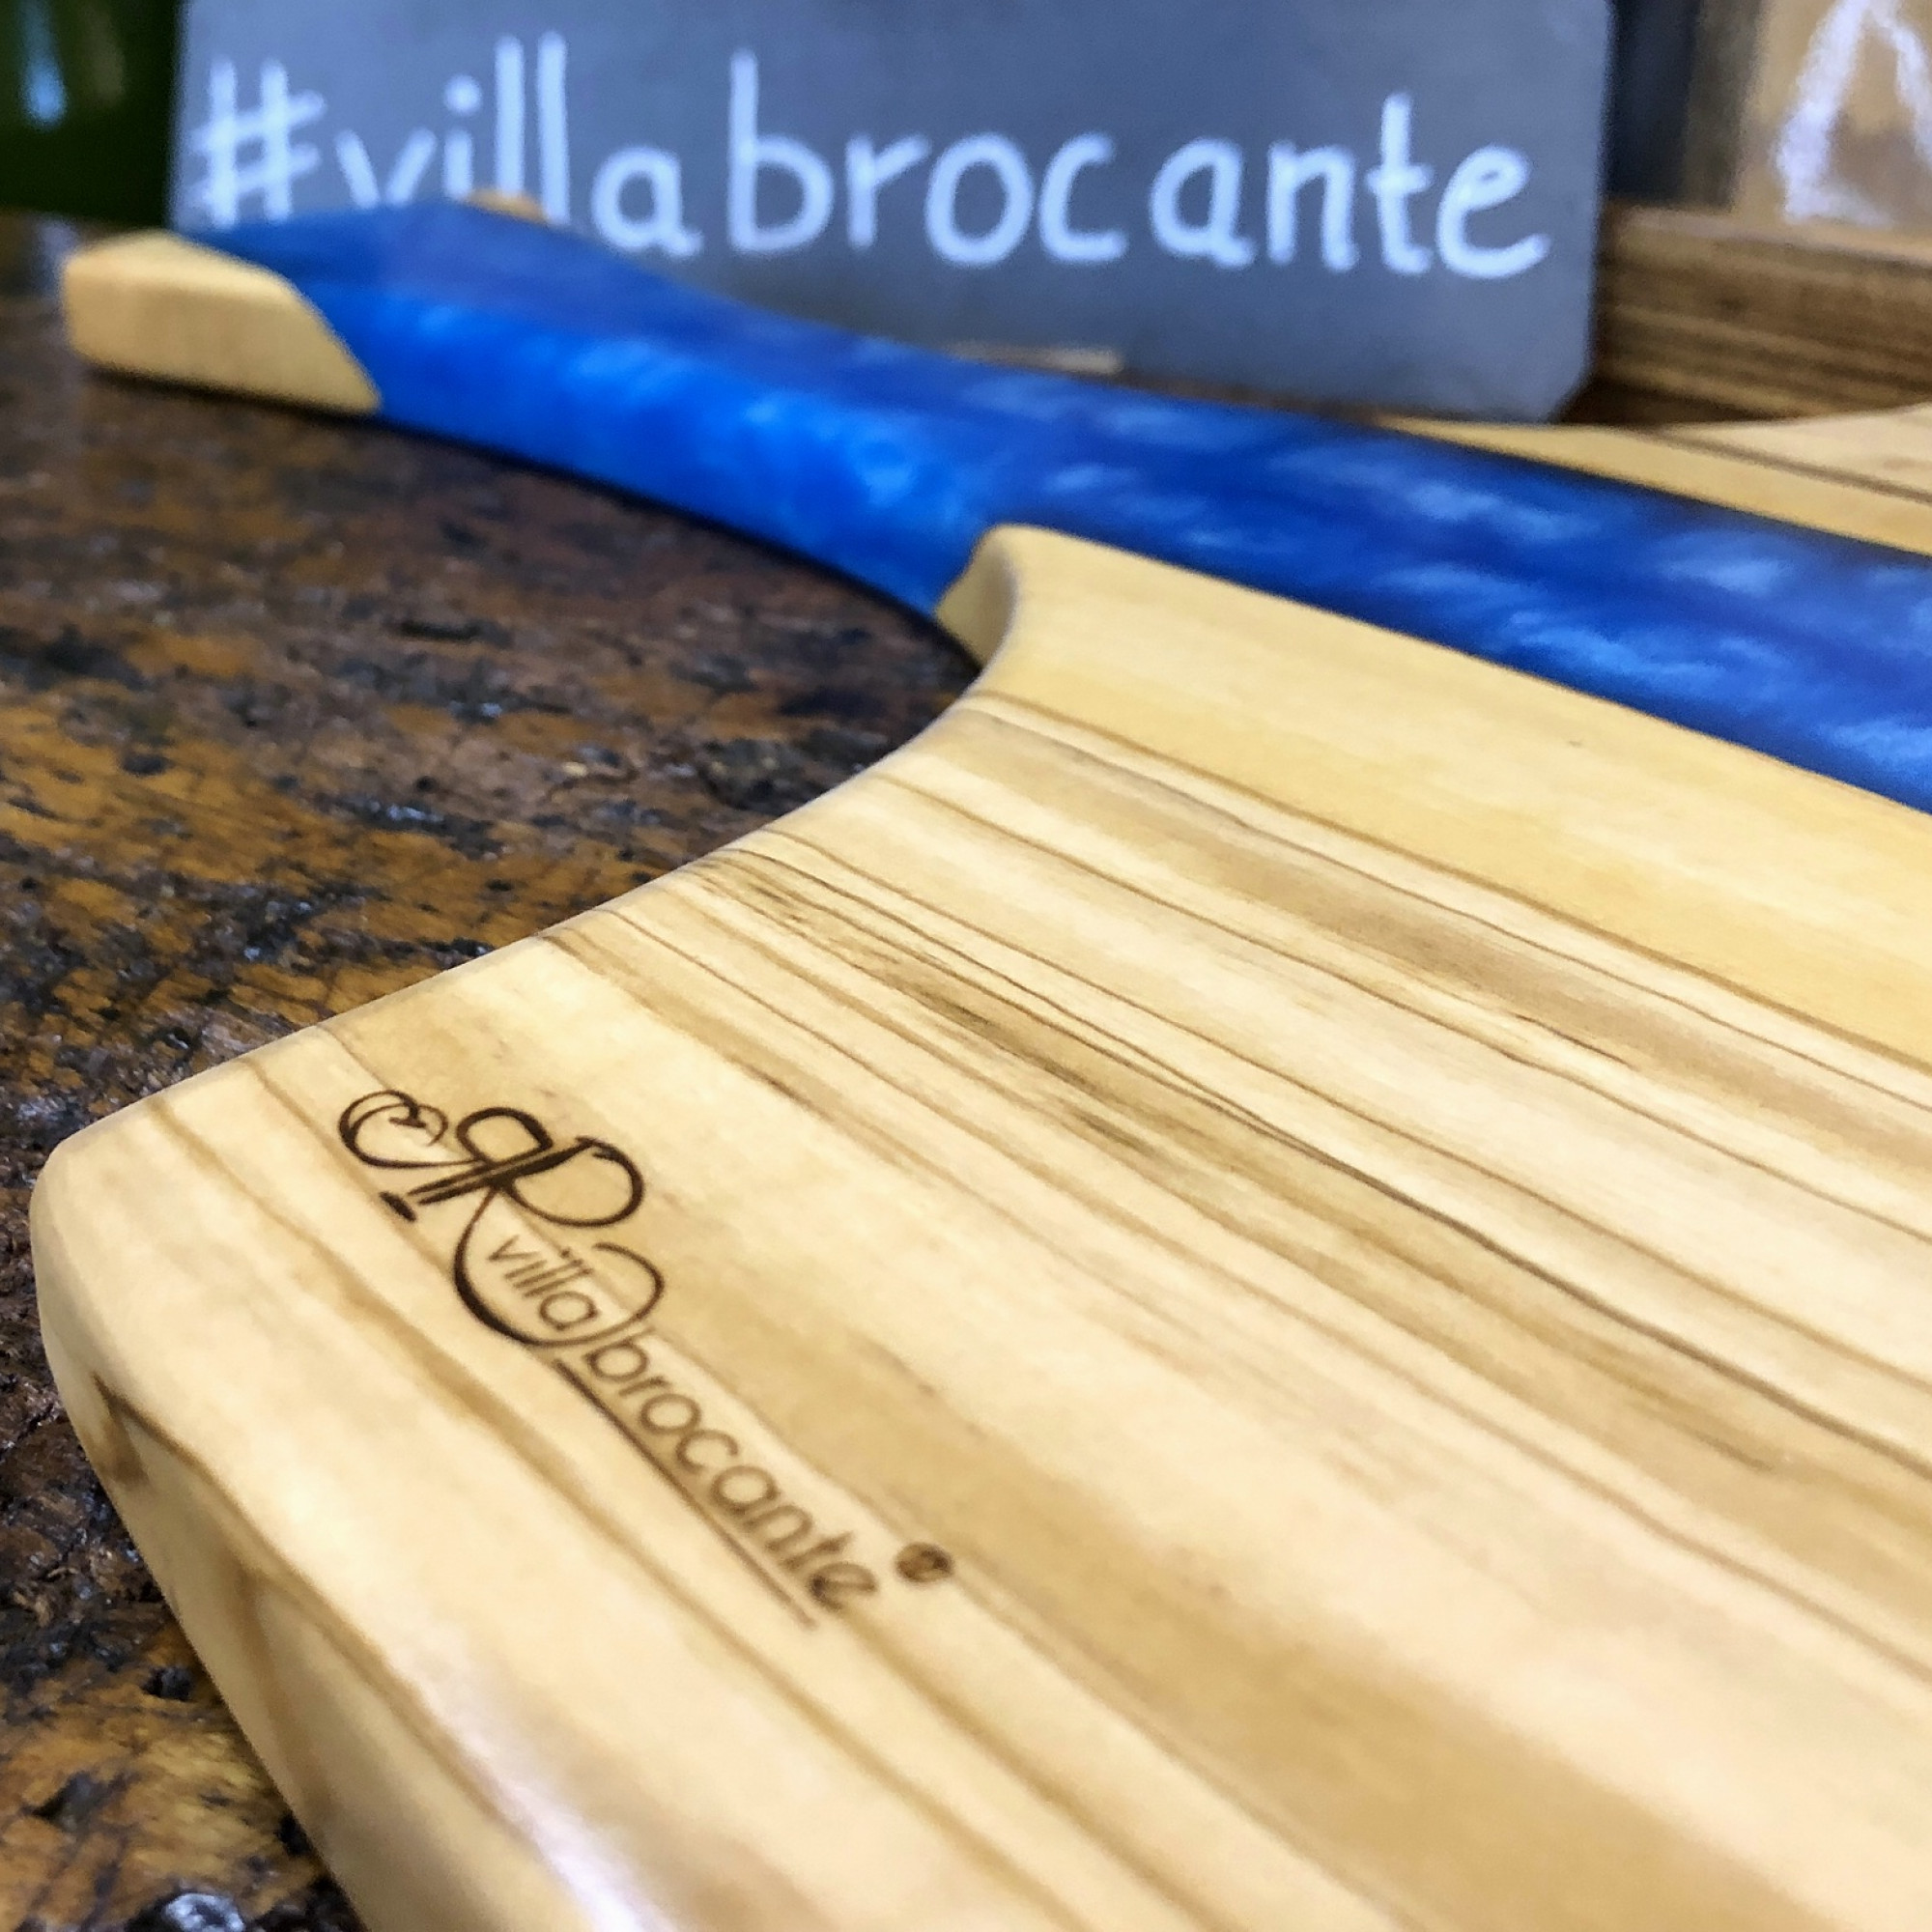 Schneidebrett Olive rustikal Holz Epoxidharz Griff villa-brocante blau